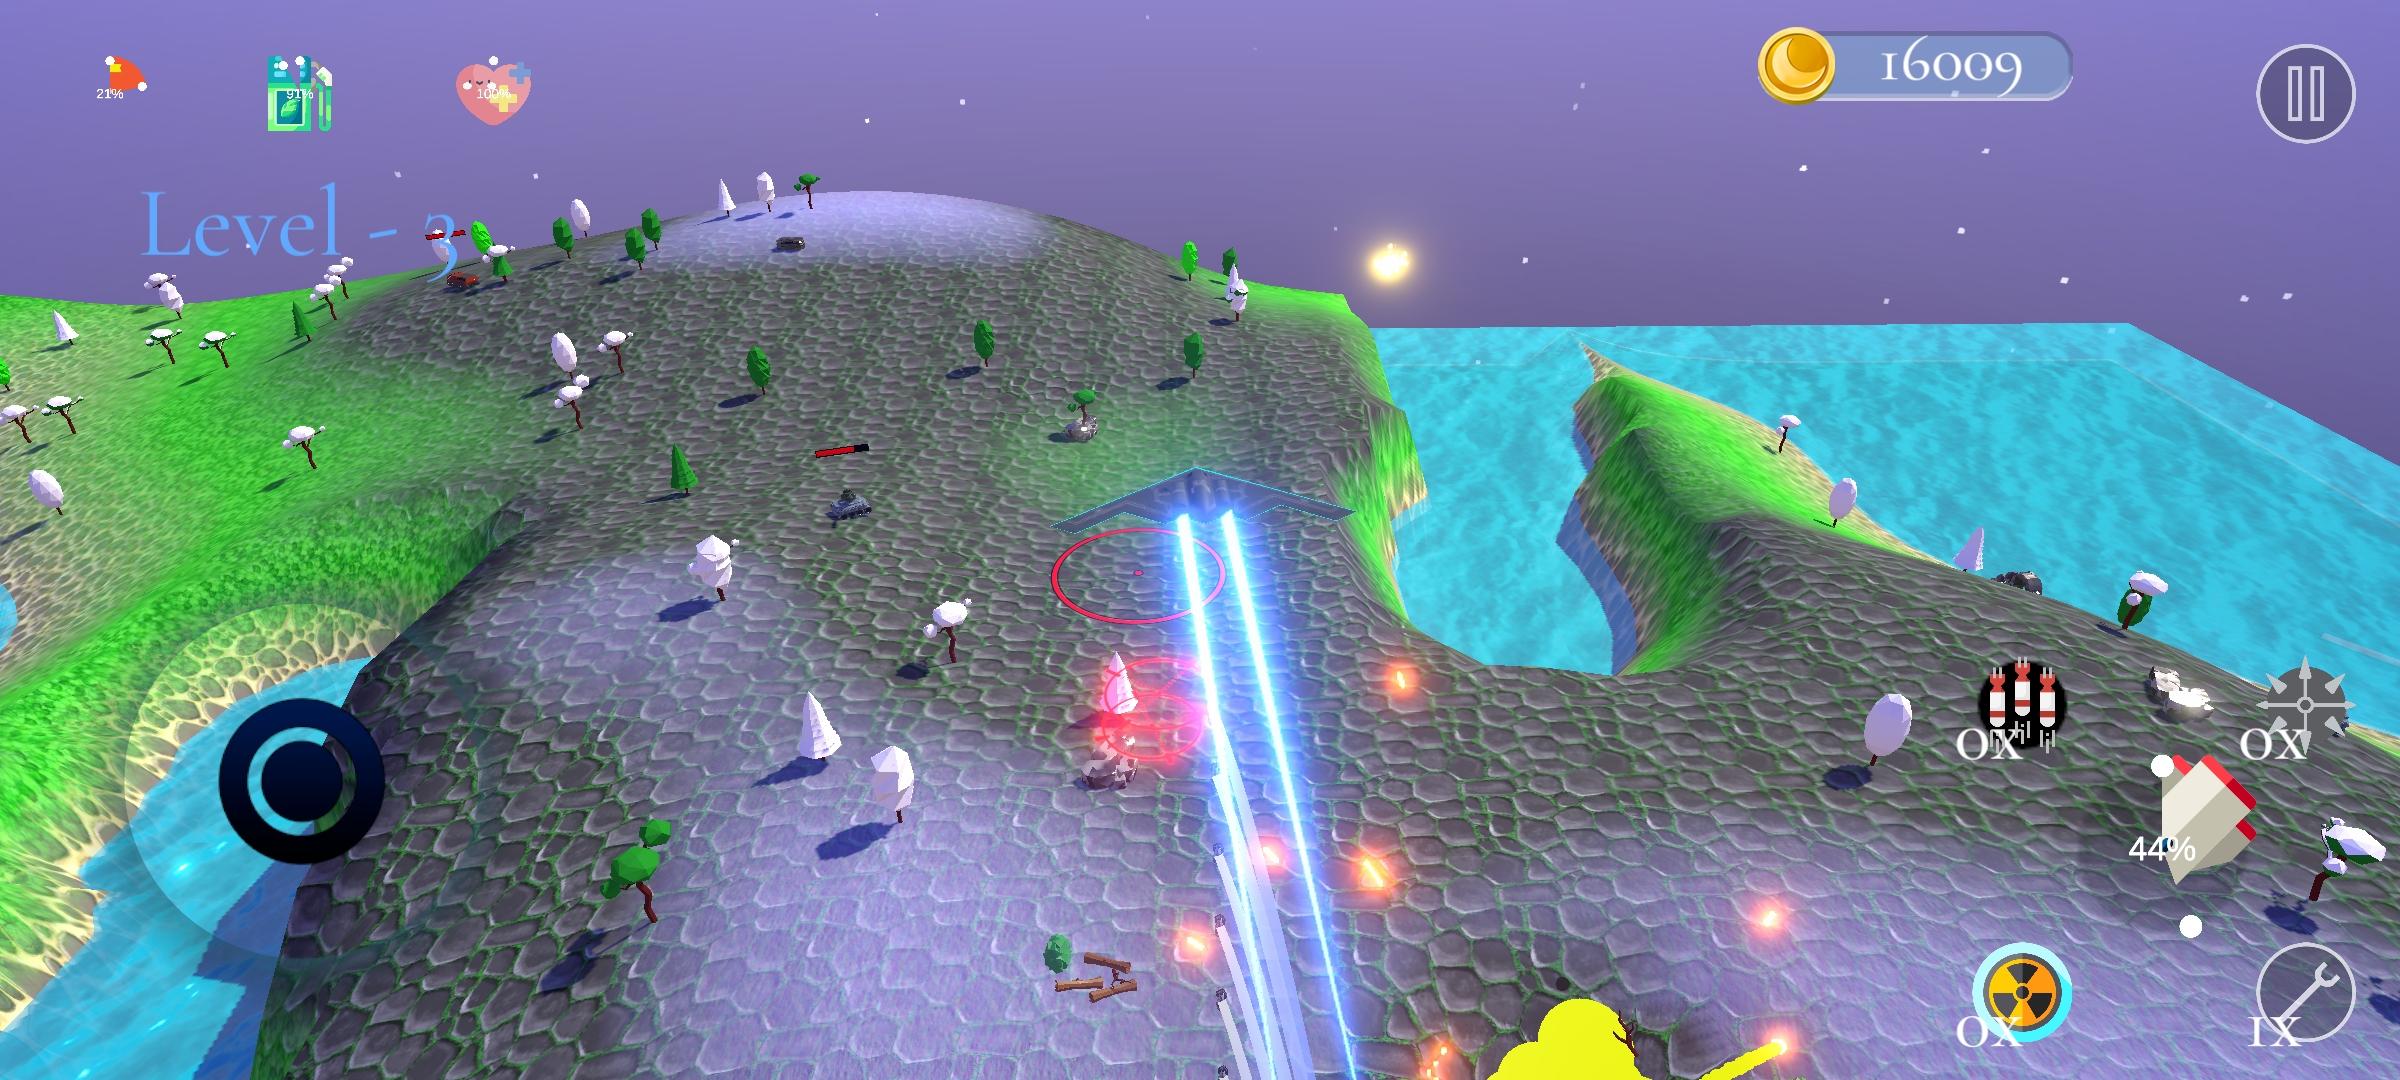 Infinite Bomber 3D 1.8 Screenshot 15